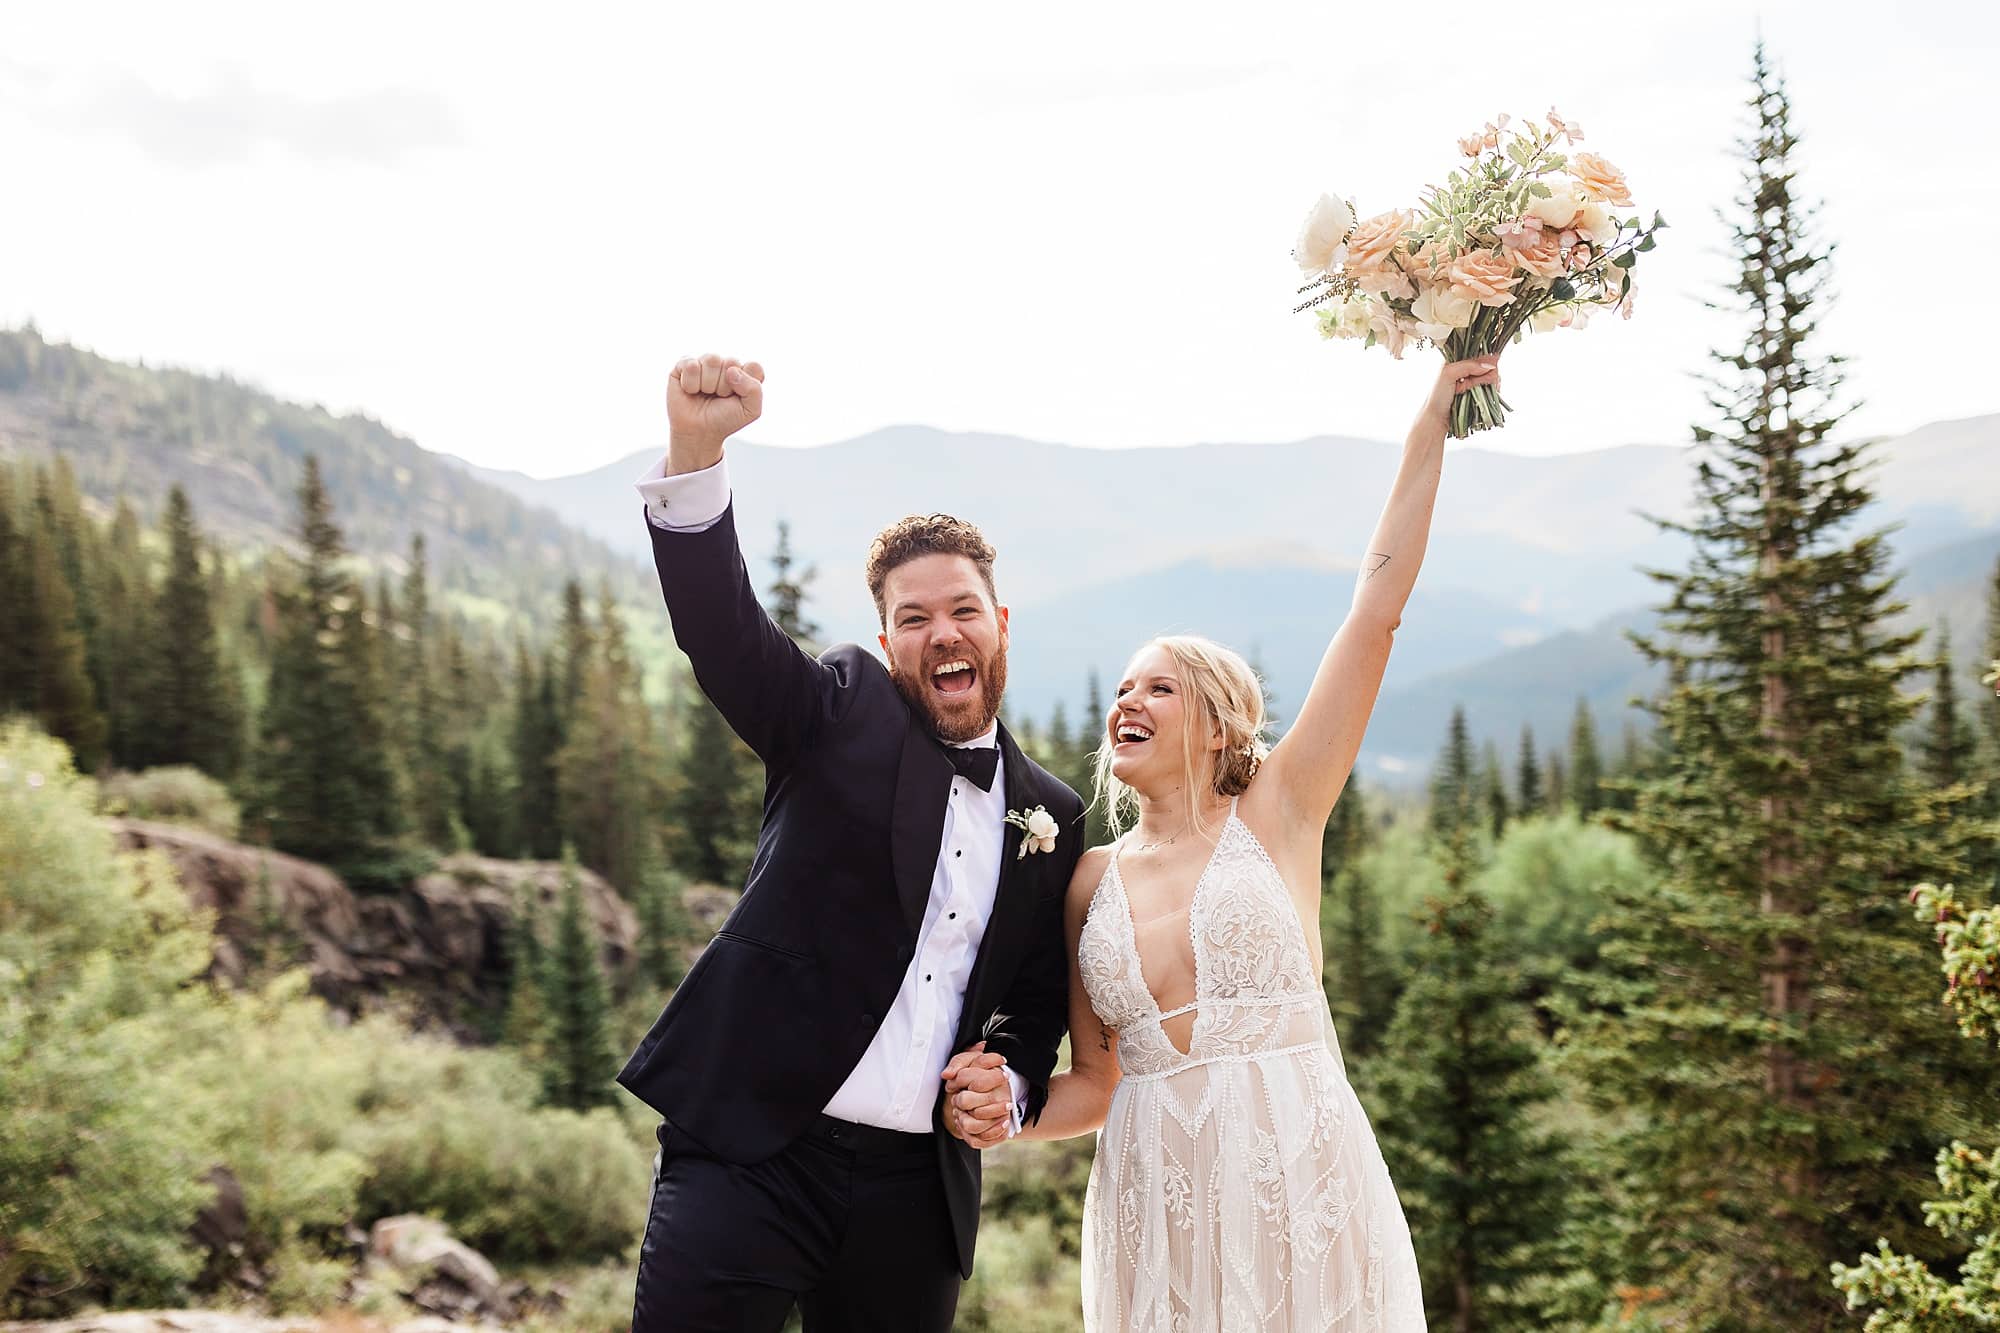 A couple celebrates their intimate wedding in Colorado